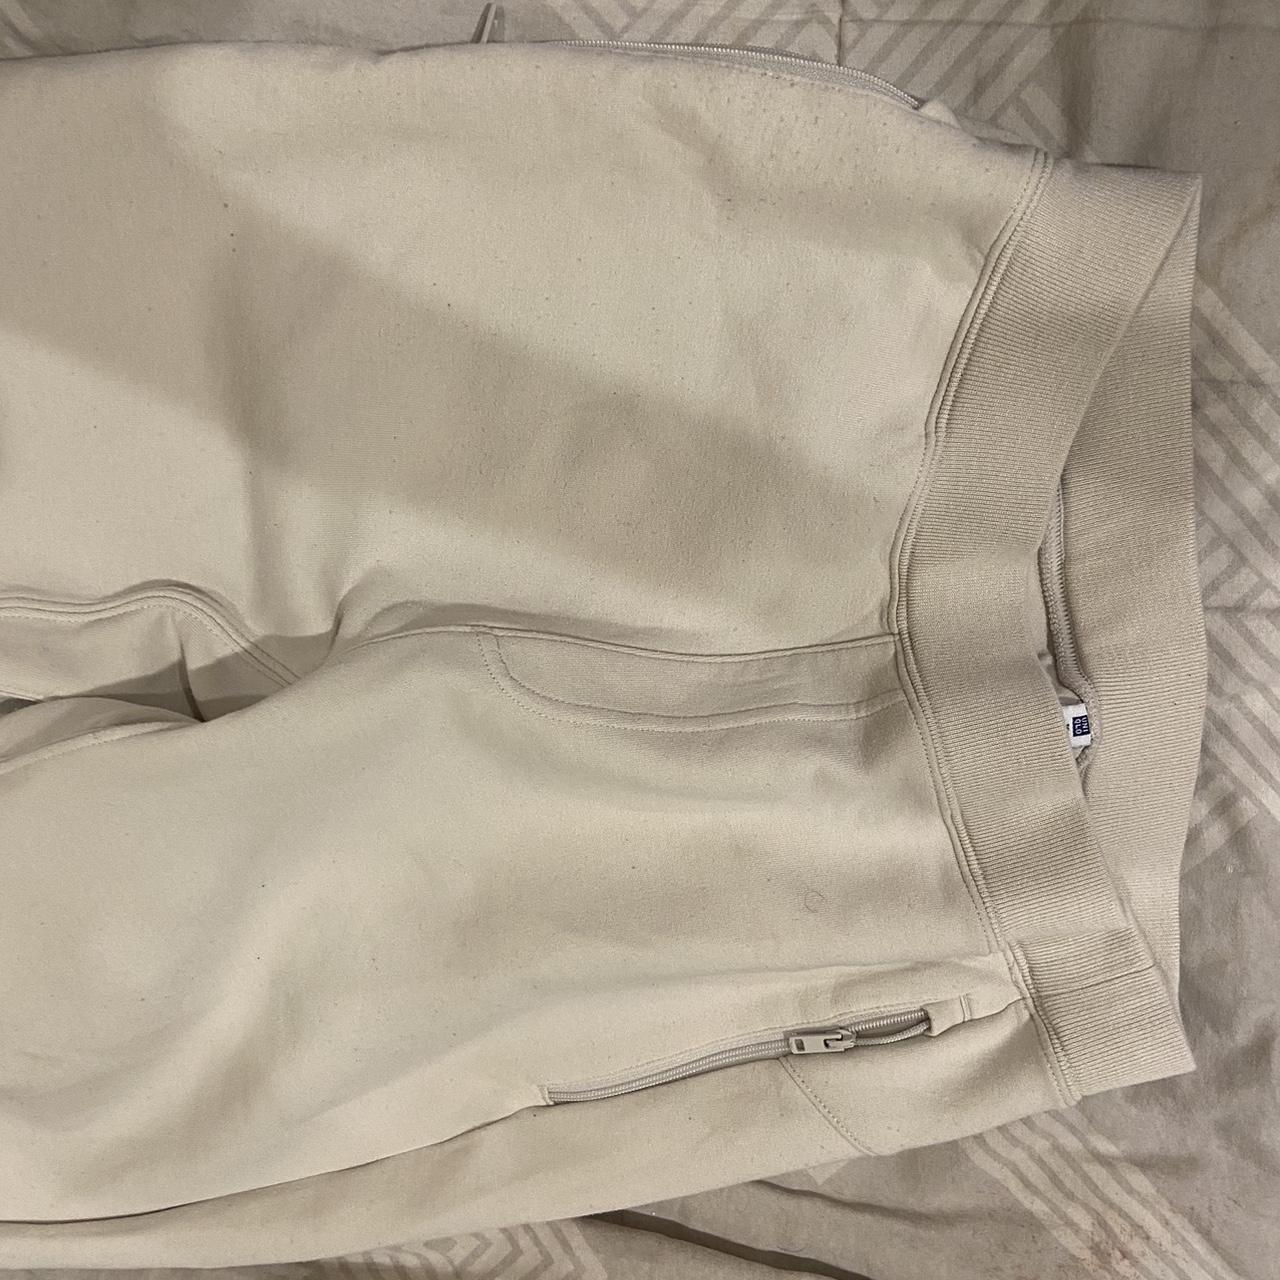 Cream Sweatpants with zipper pockets - Depop